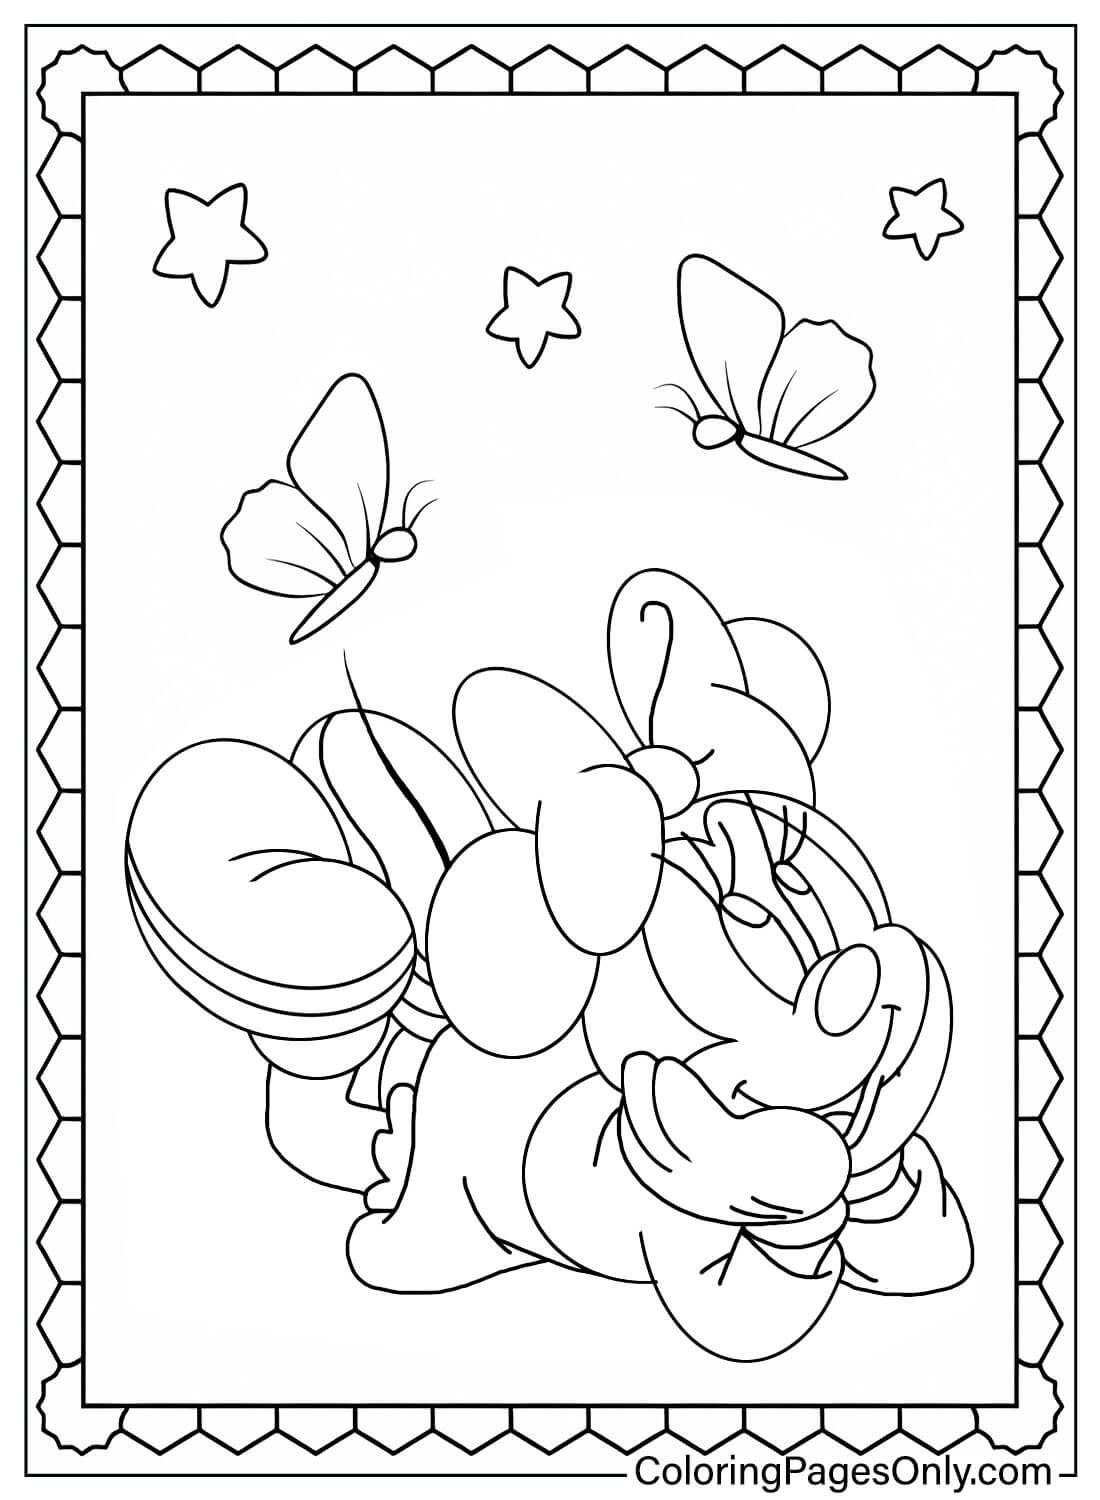 Adorable página para colorear de Minnie Mouse de Minnie Mouse